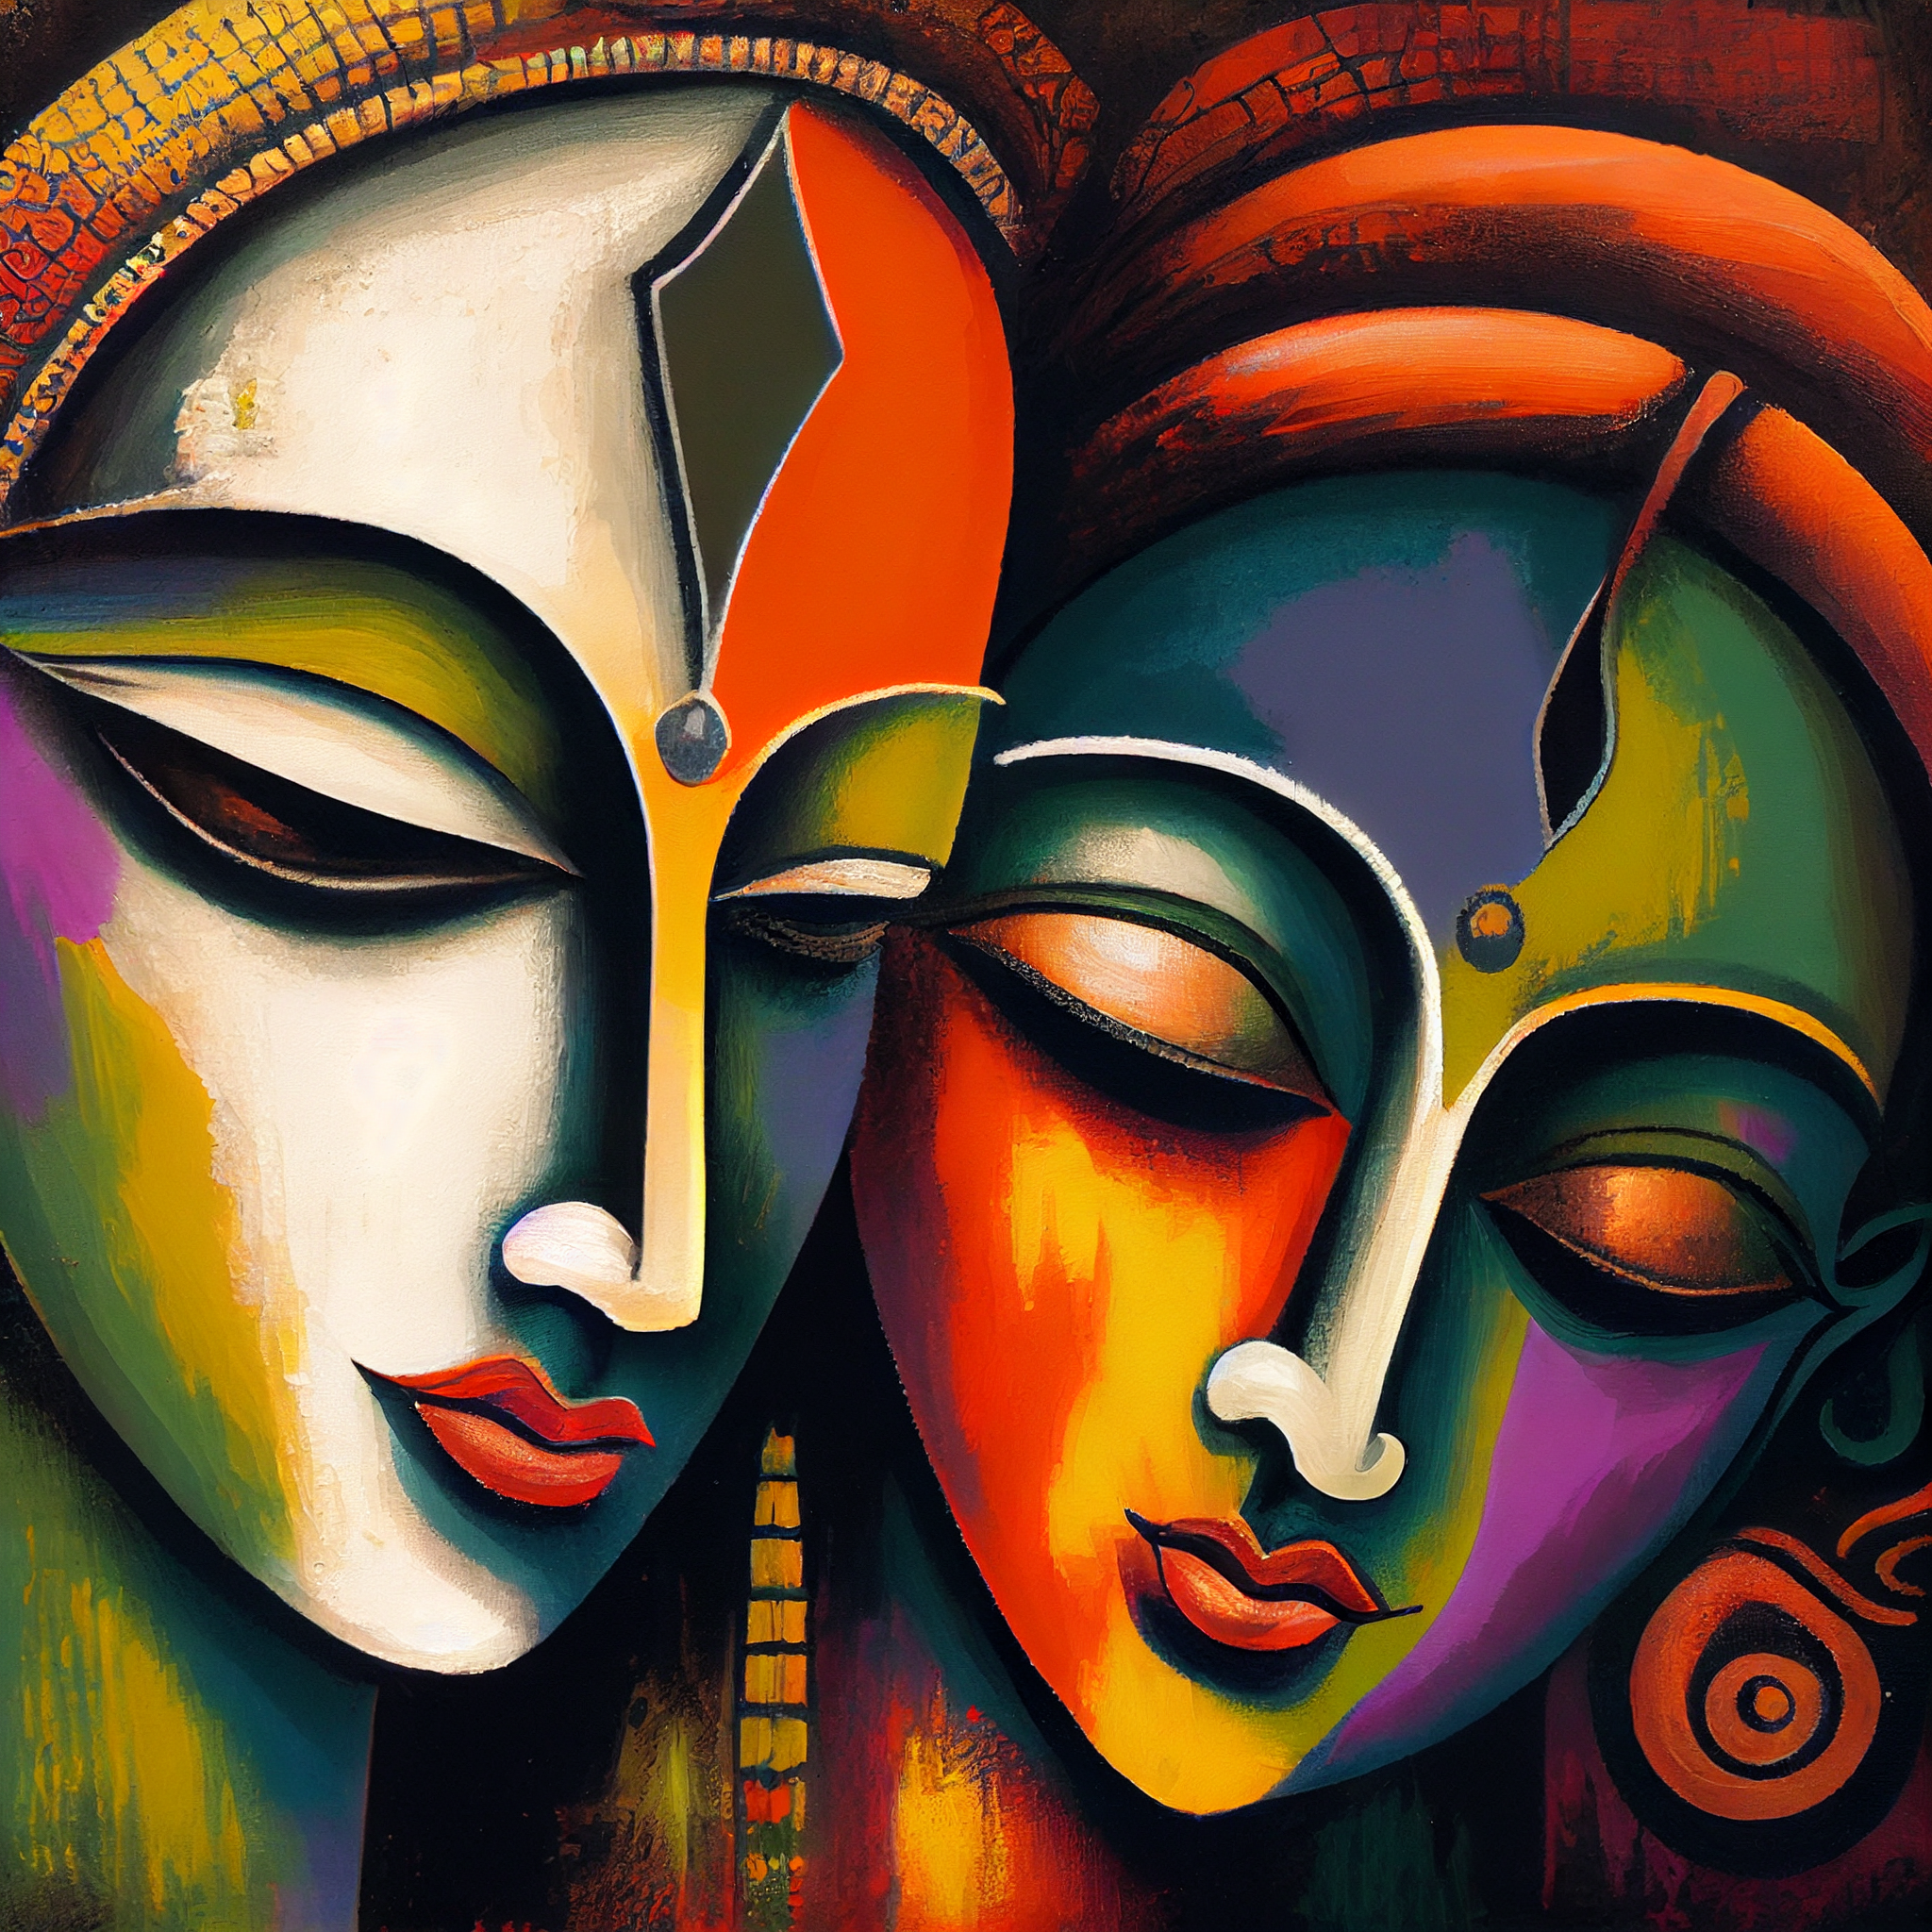 Radha Krishna painting - The Eternal Love by ArtsNyou on DeviantArt